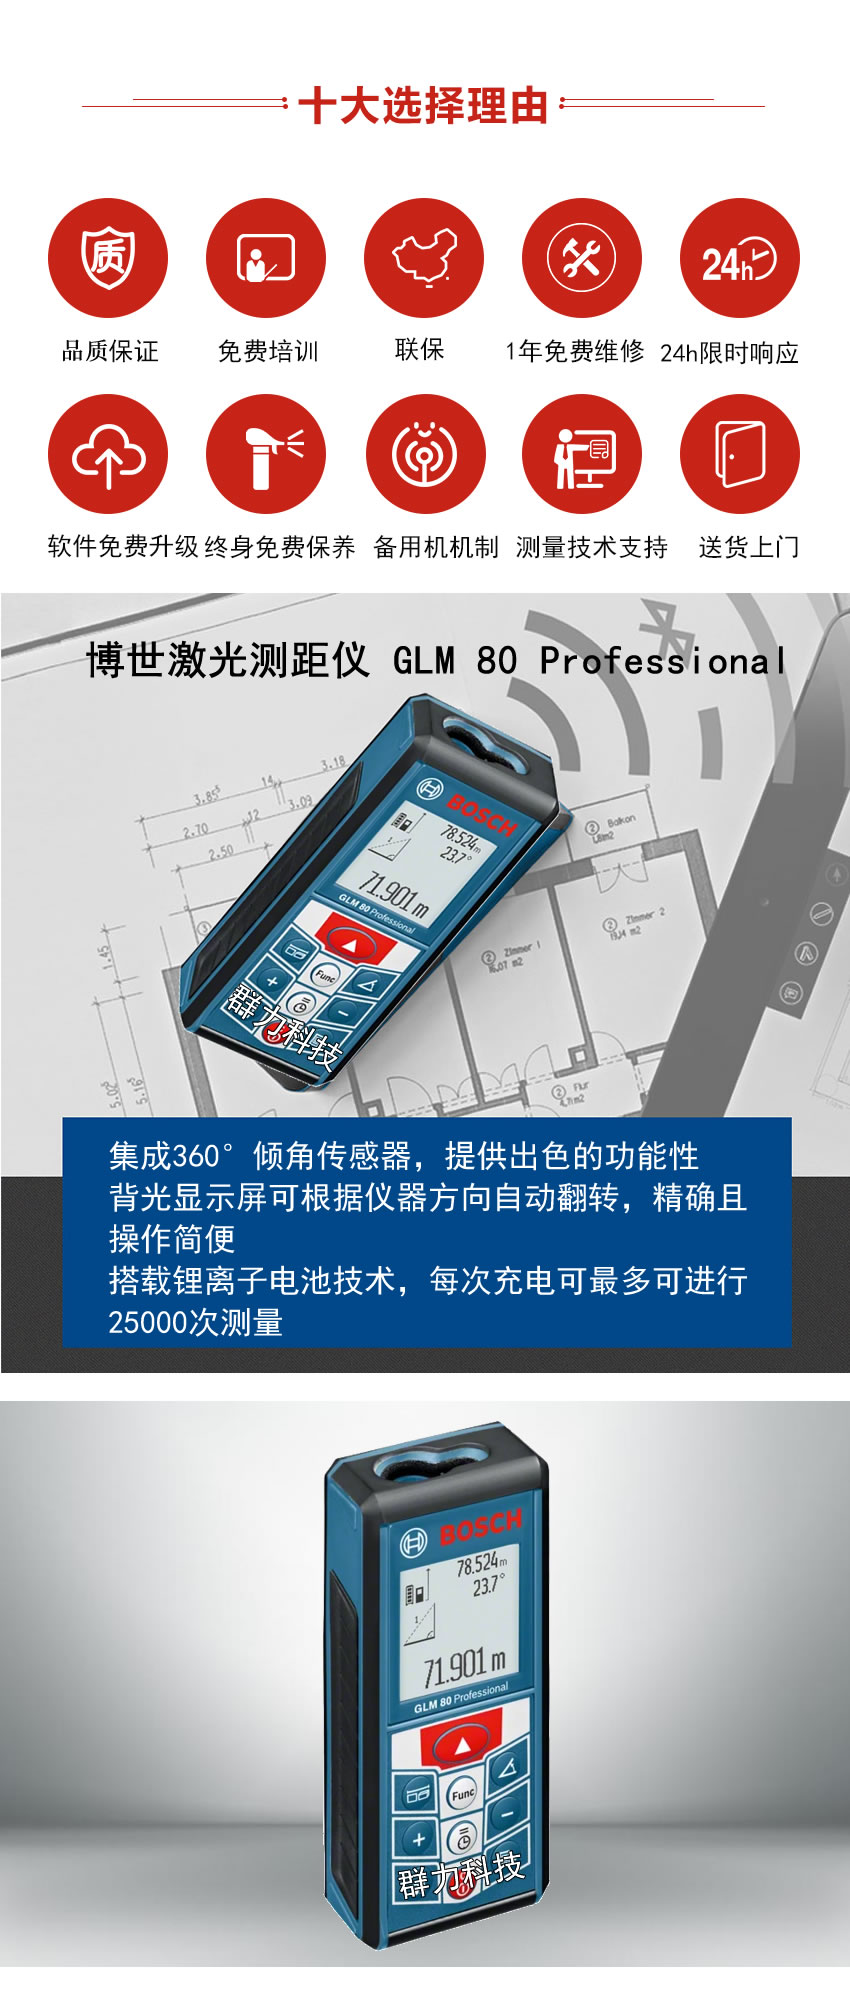 博世激光测距仪 GLM 80 Professional.jpg